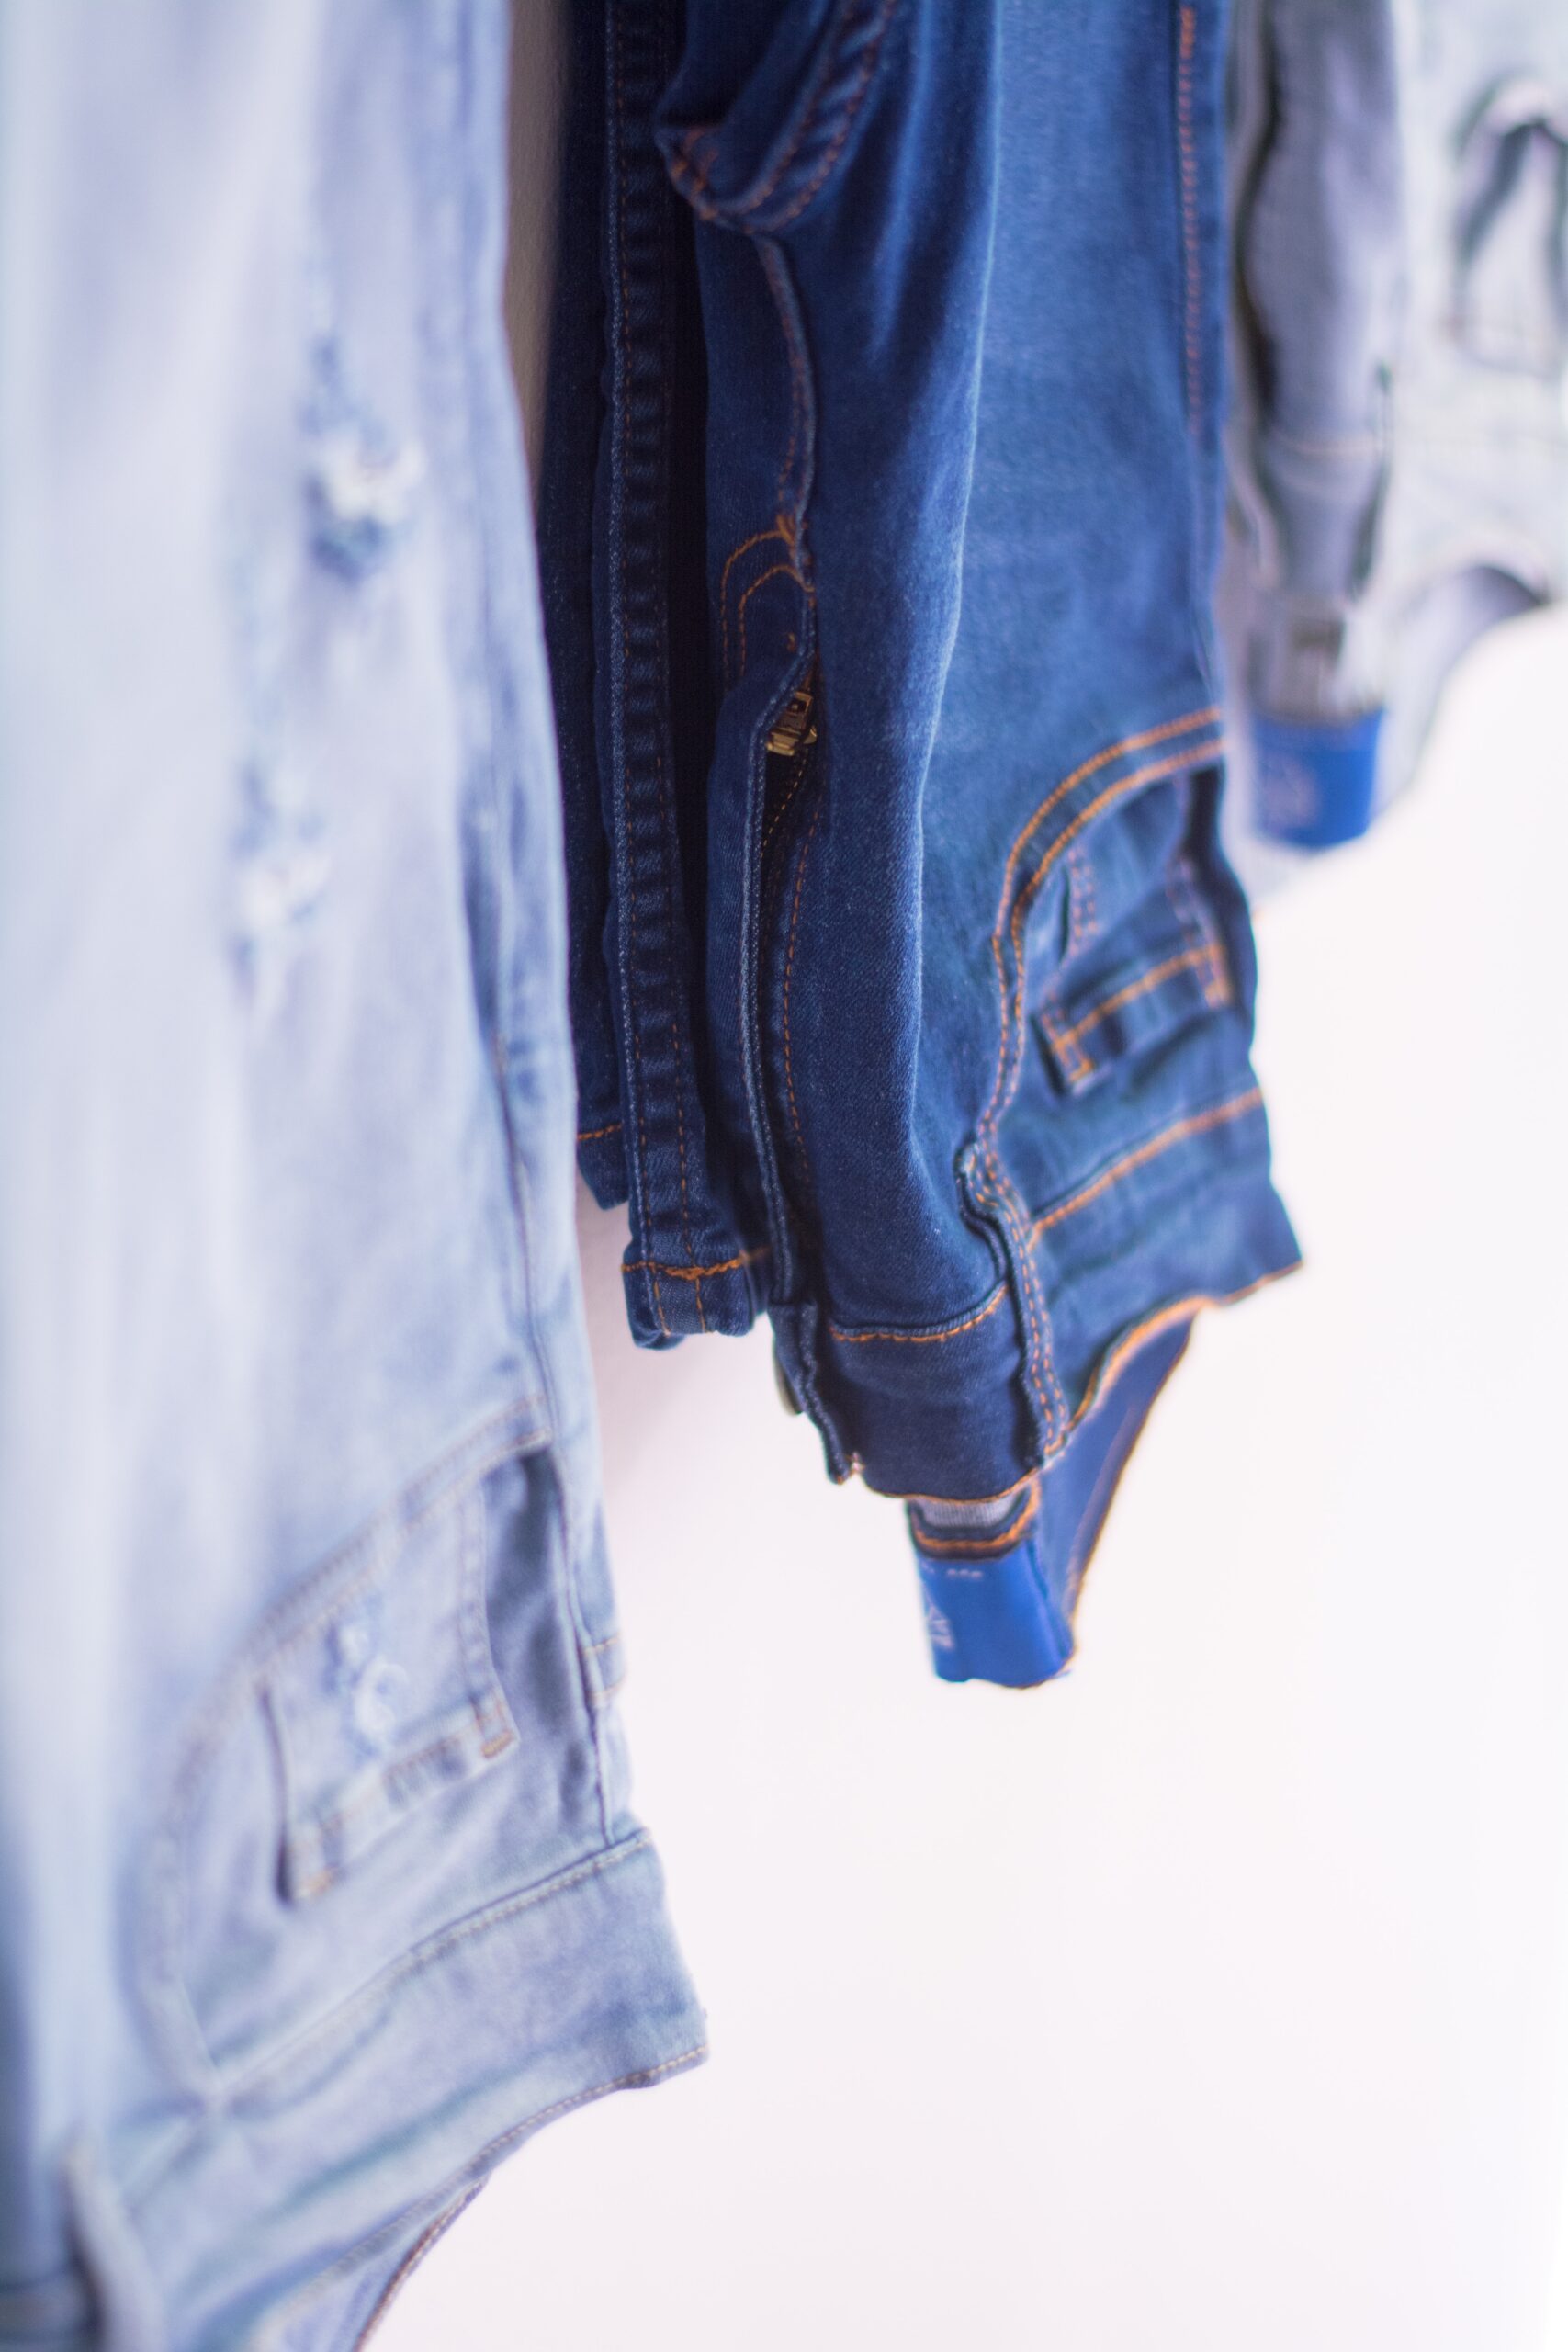 denim jeans hanging on a line